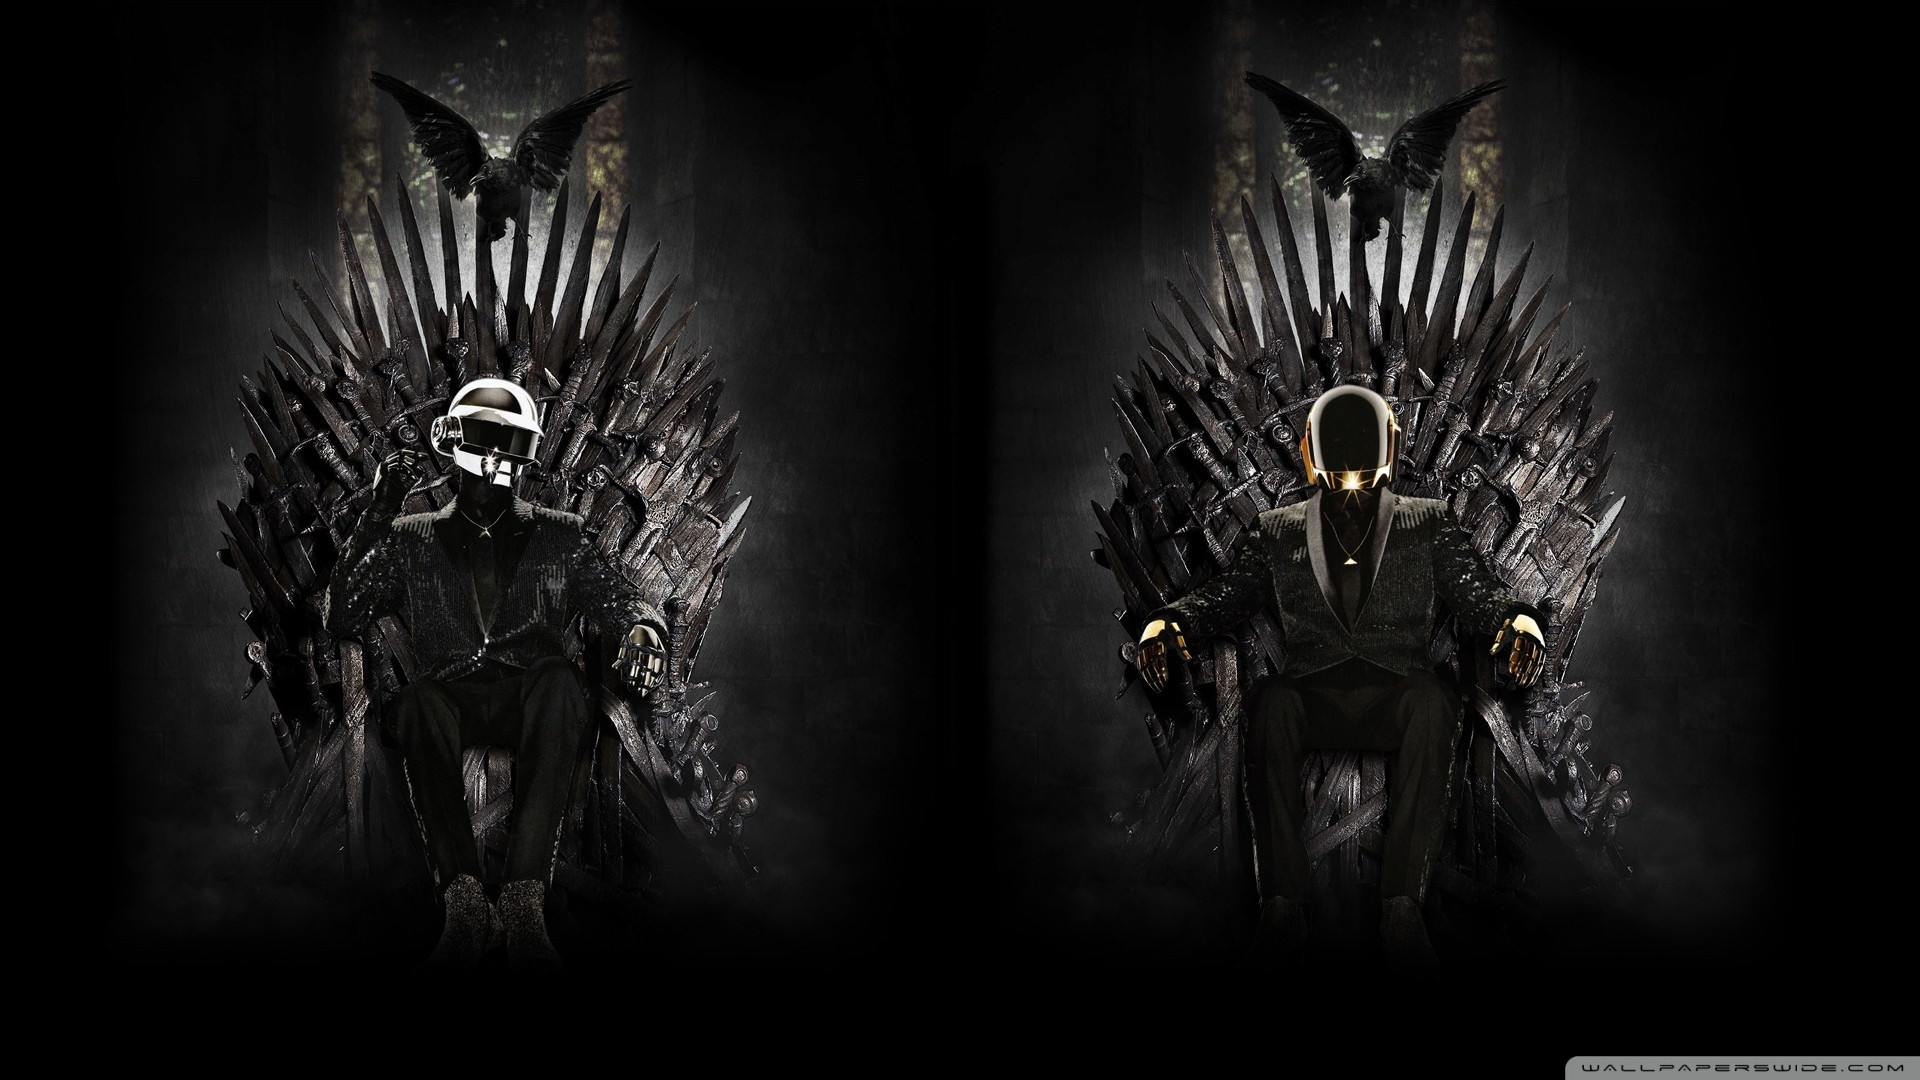 General 1920x1080 Daft Punk Game of Thrones Iron Throne mashup electronic music crossover sitting music musician watermarked